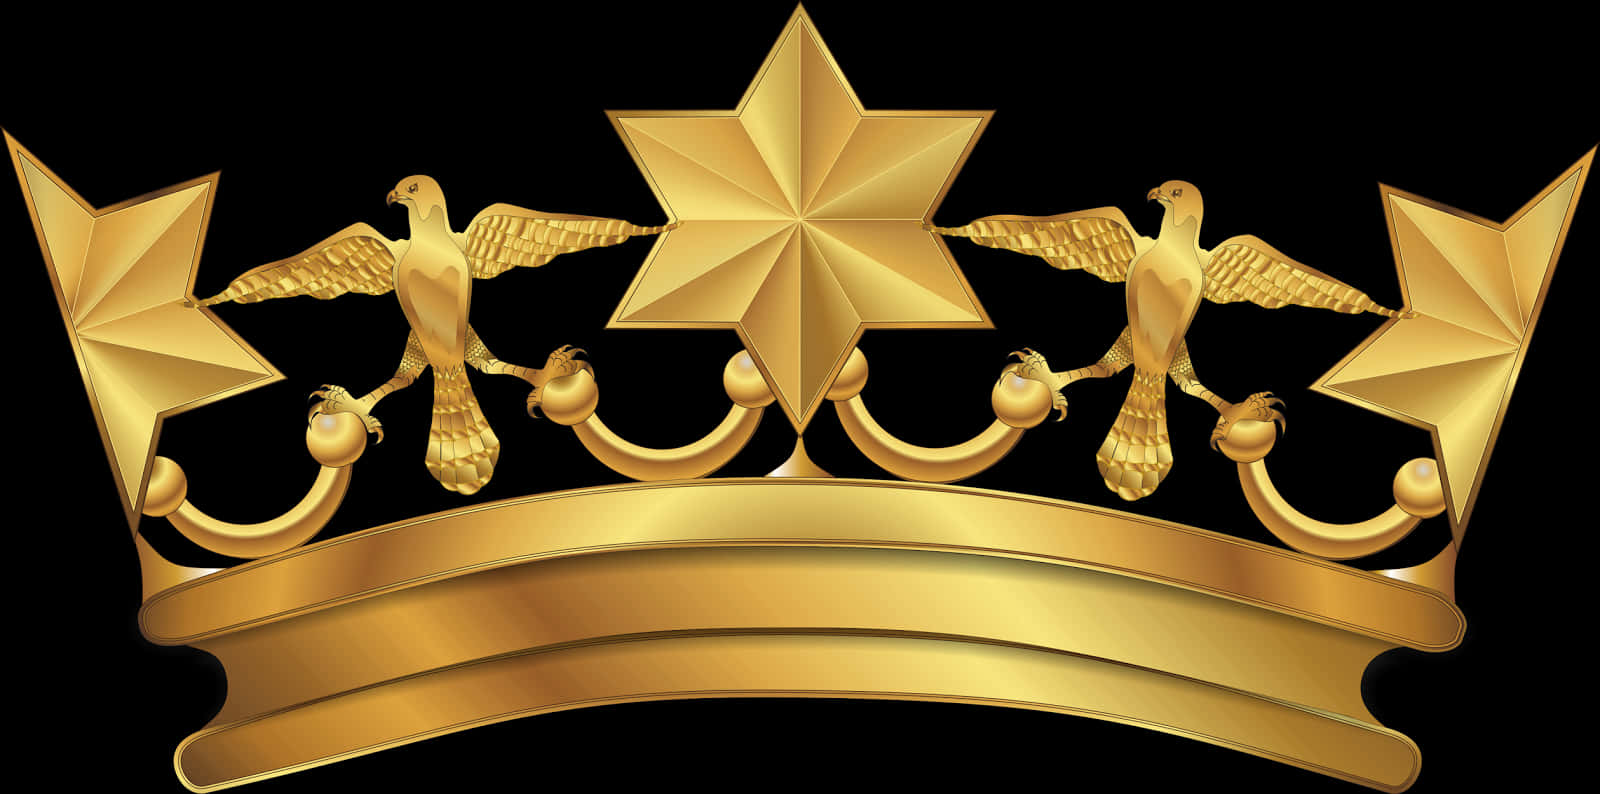 Golden Arabesque Crown Design PNG image